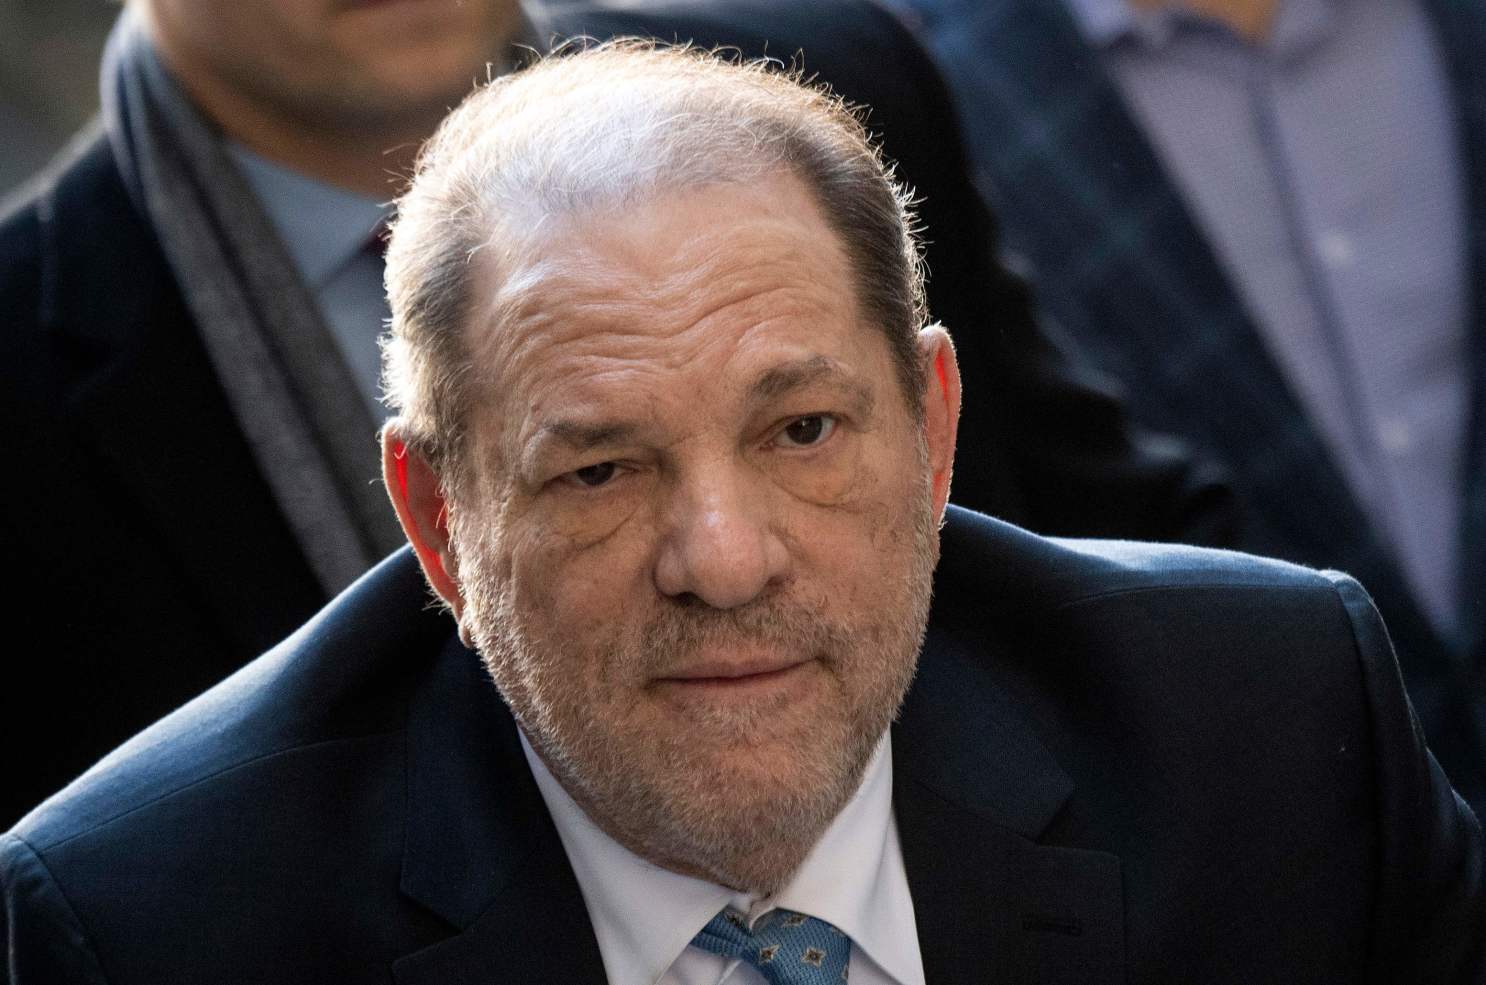 Weinstein gets 23 years in prison for sexual assault